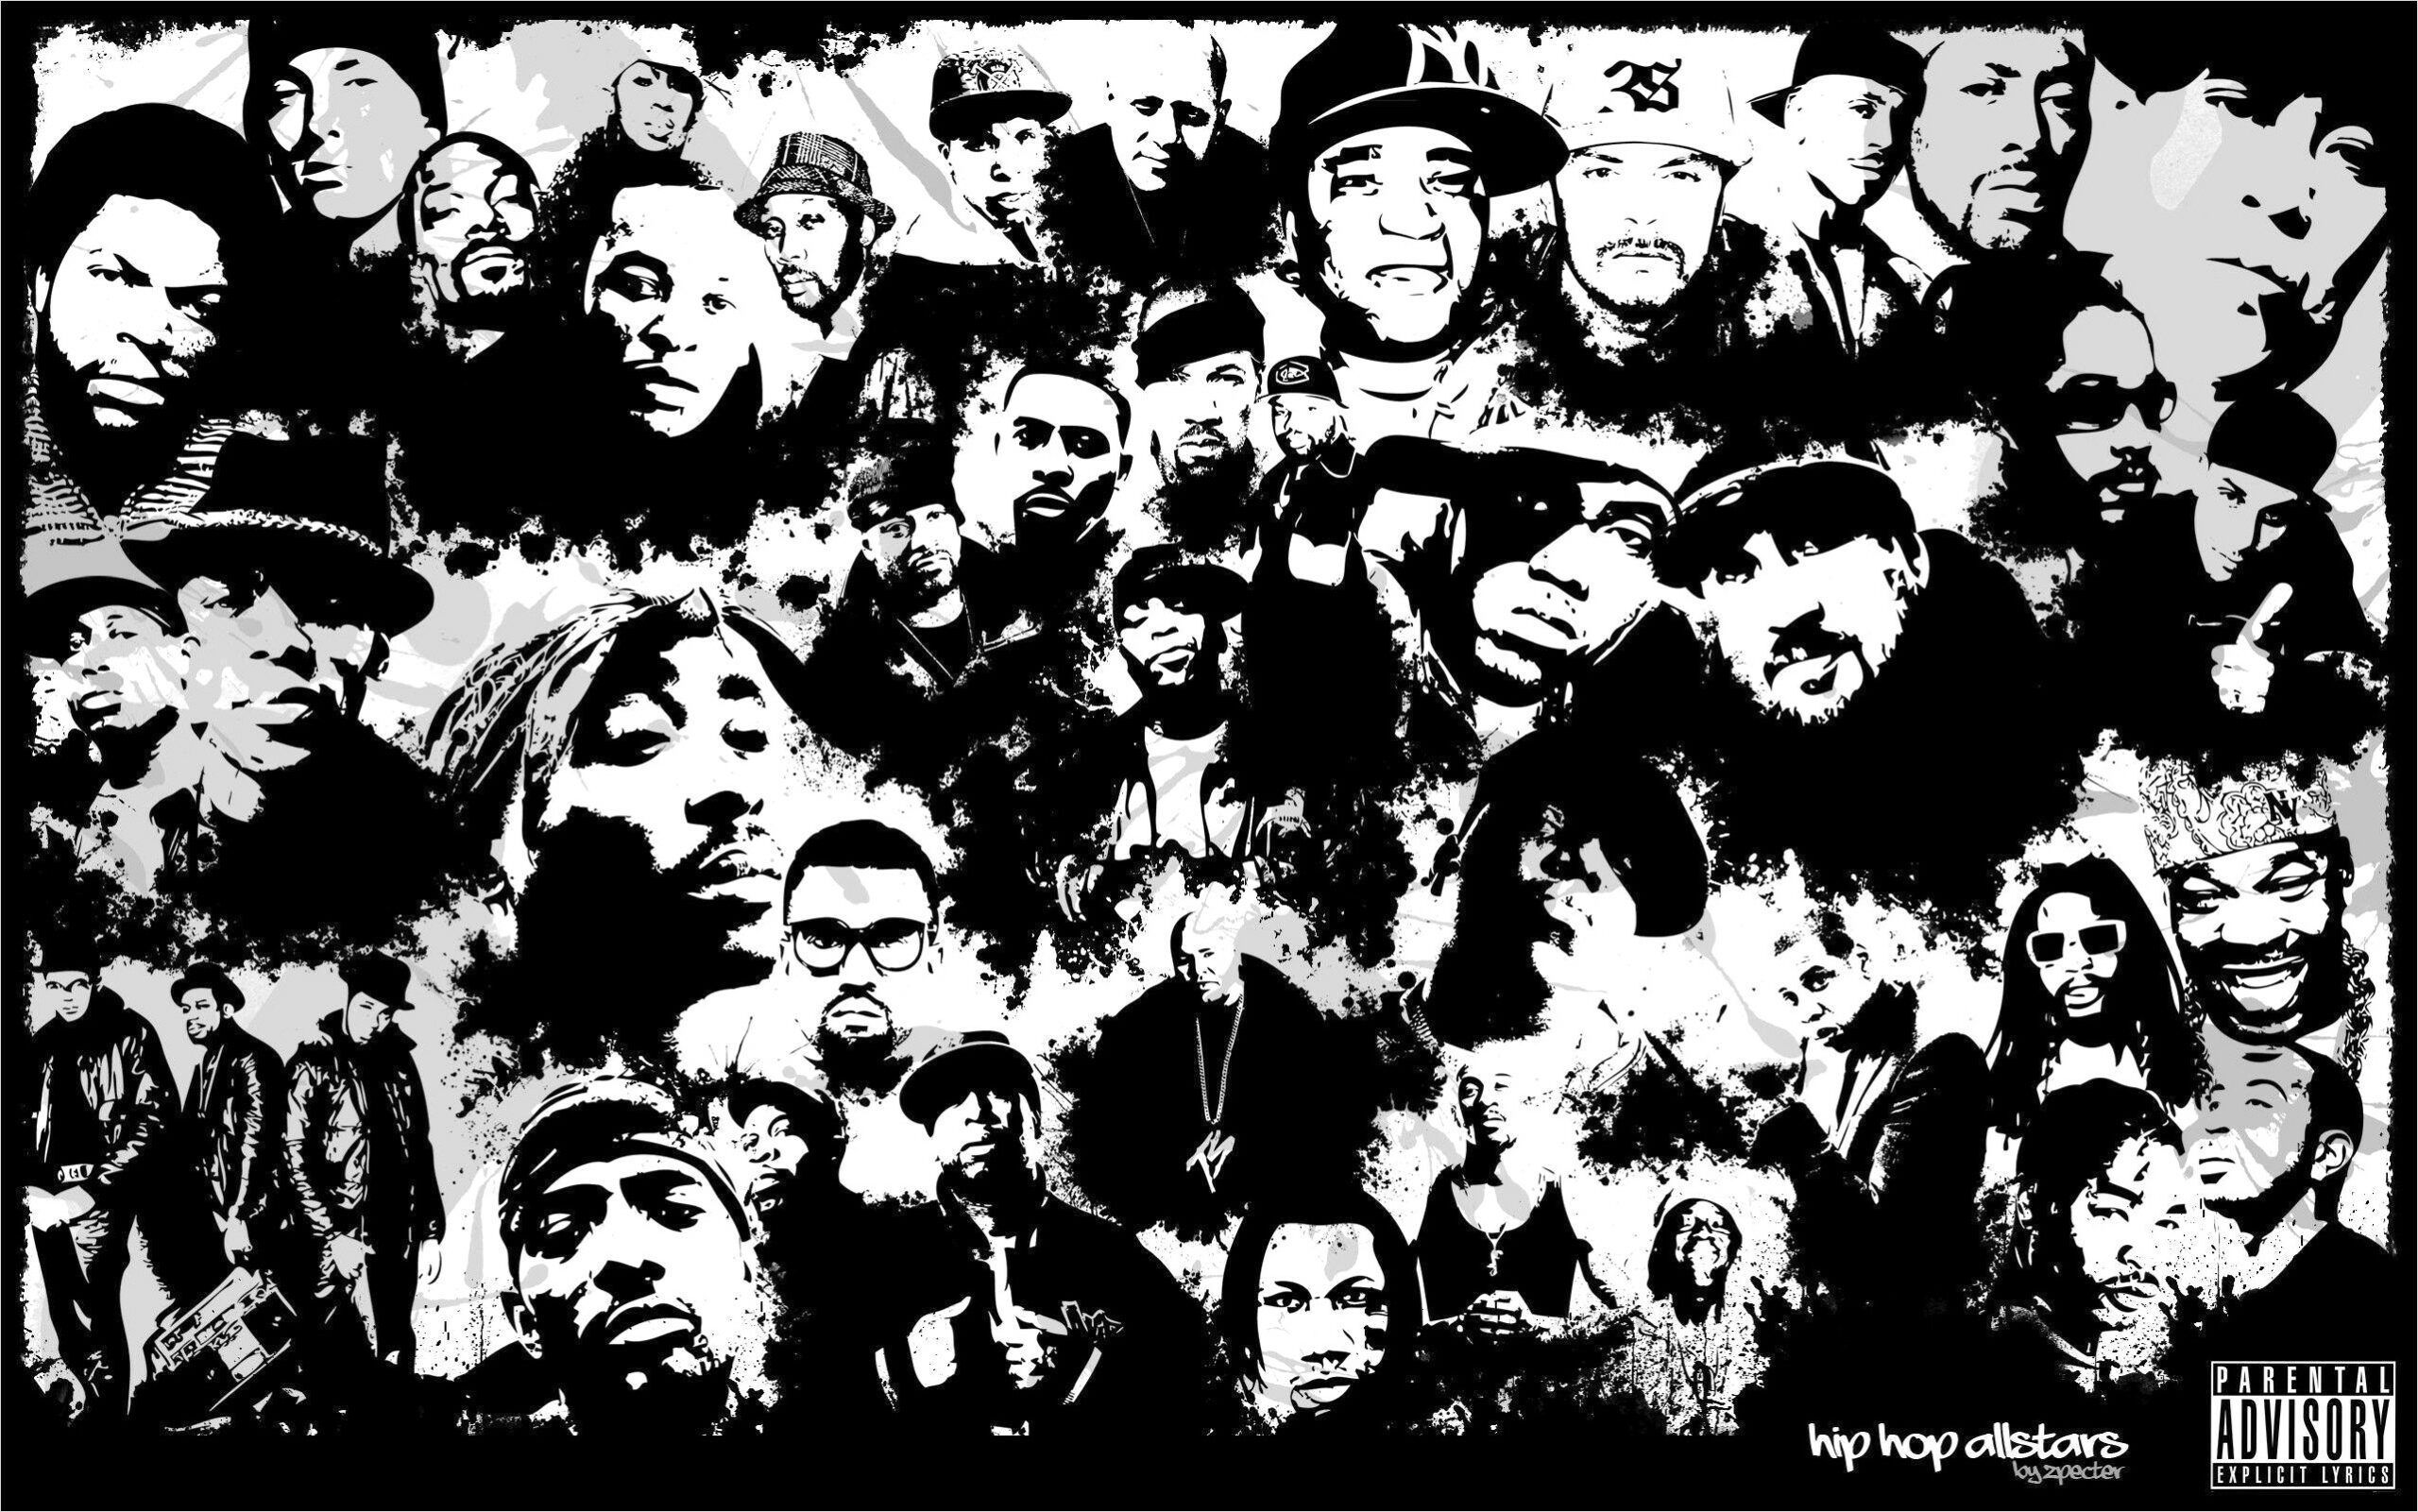 4k Hip Hop Wallpaper. Hip hop wallpaper, Music wallpaper, Poster prints